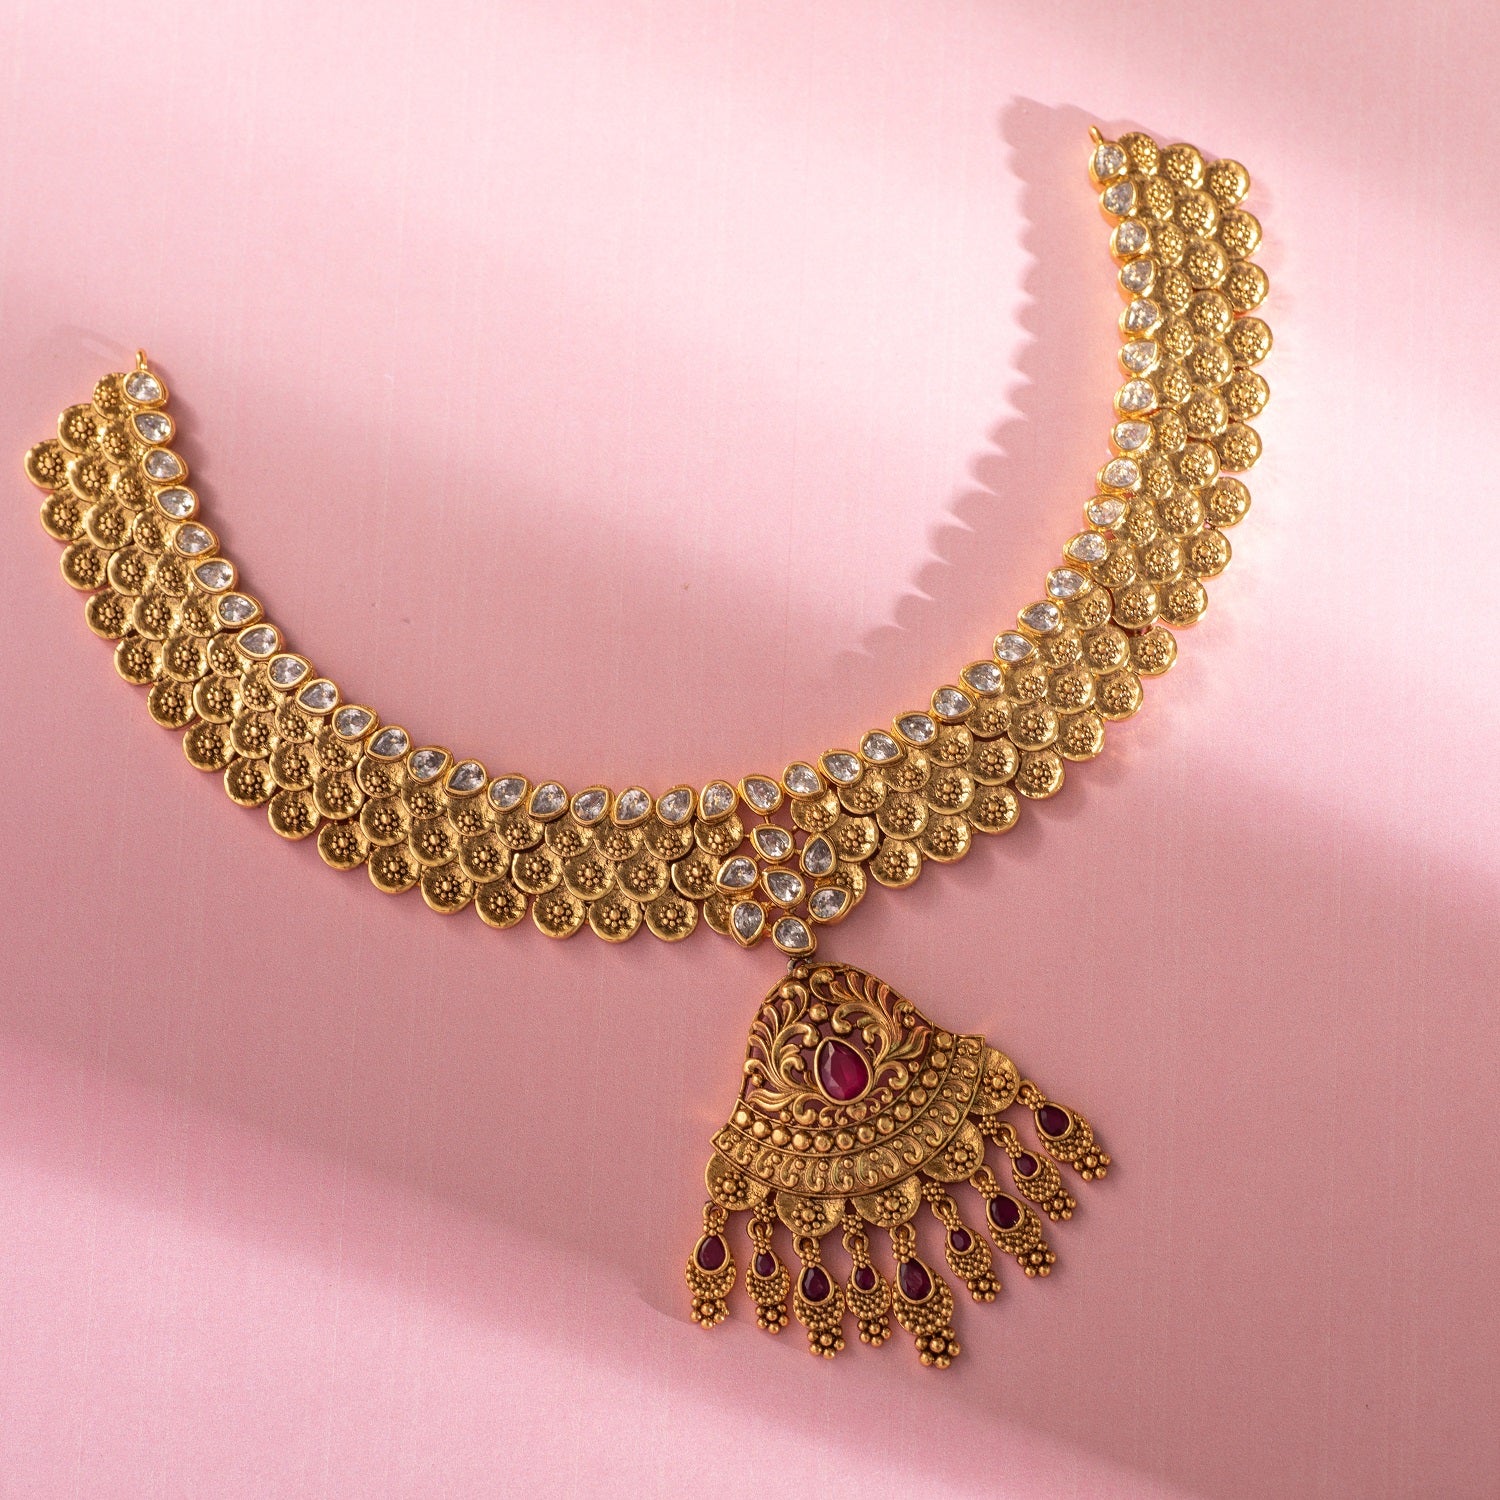 Sukkhi Sparkling Gold Plated Choker Necklace Set For Women - Sukkhi.com